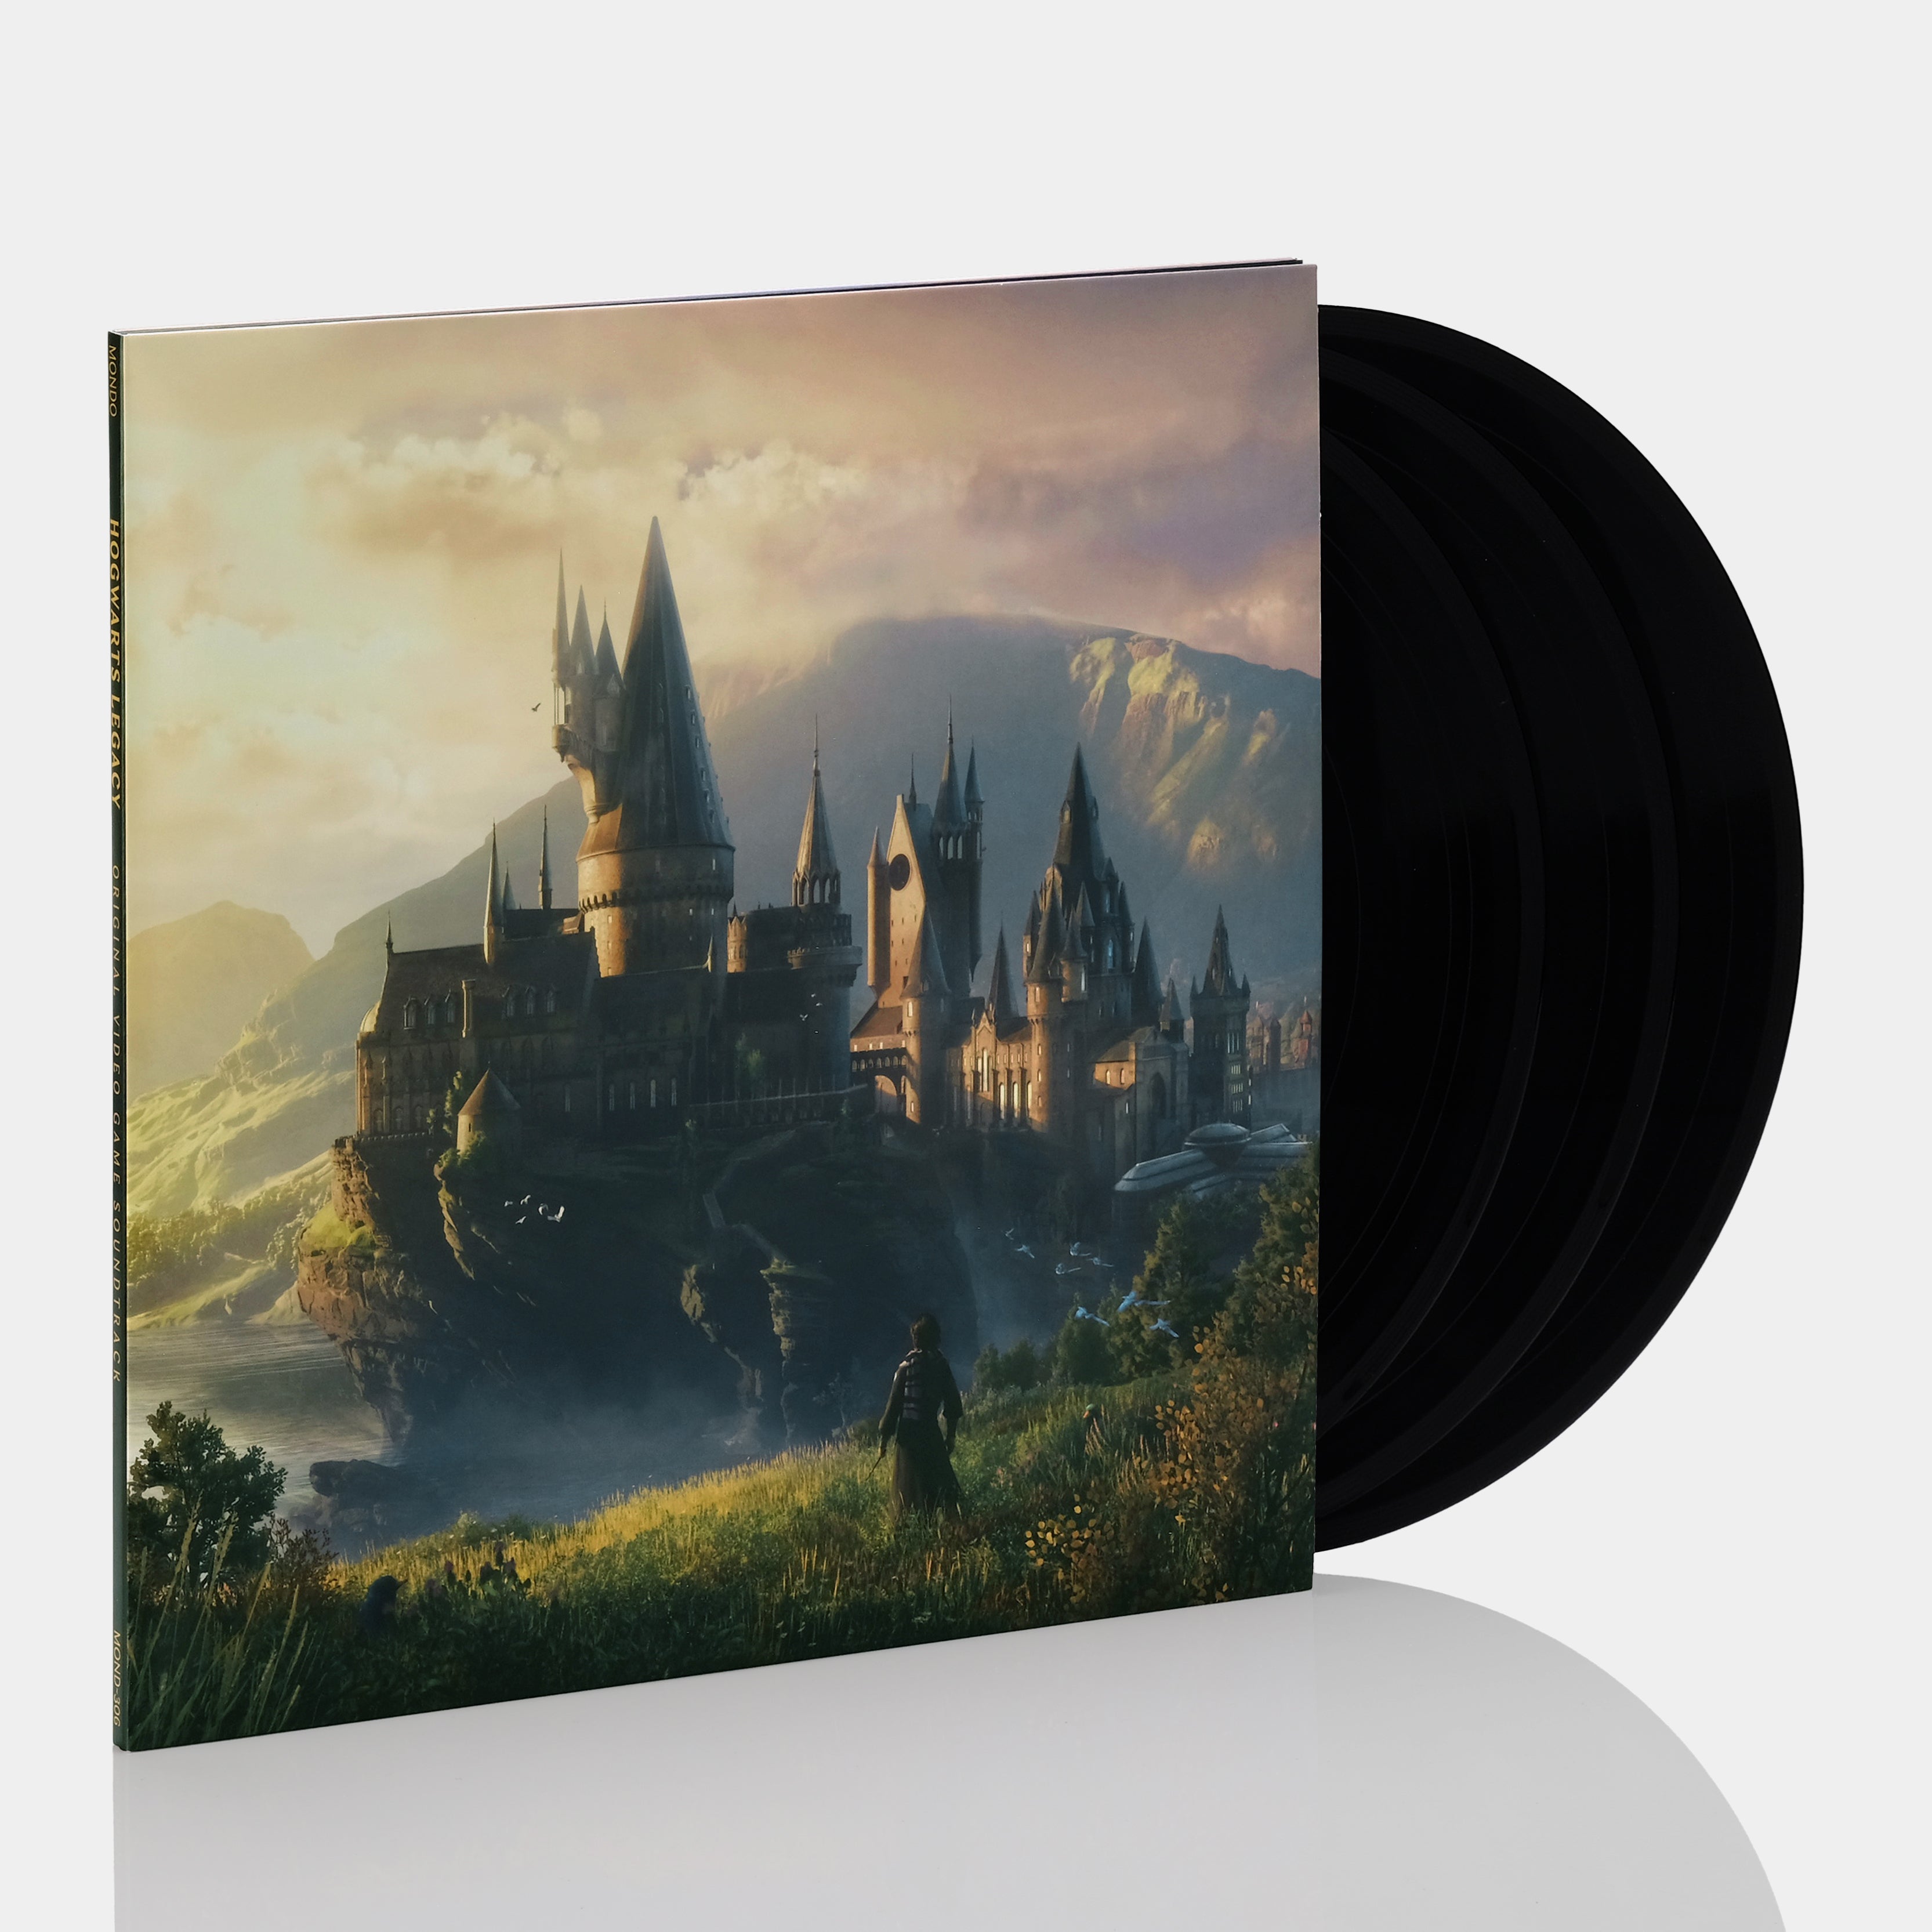 Hogwarts Legacy (Original Video Game Soundtrack) 3xLP Vinyl Record